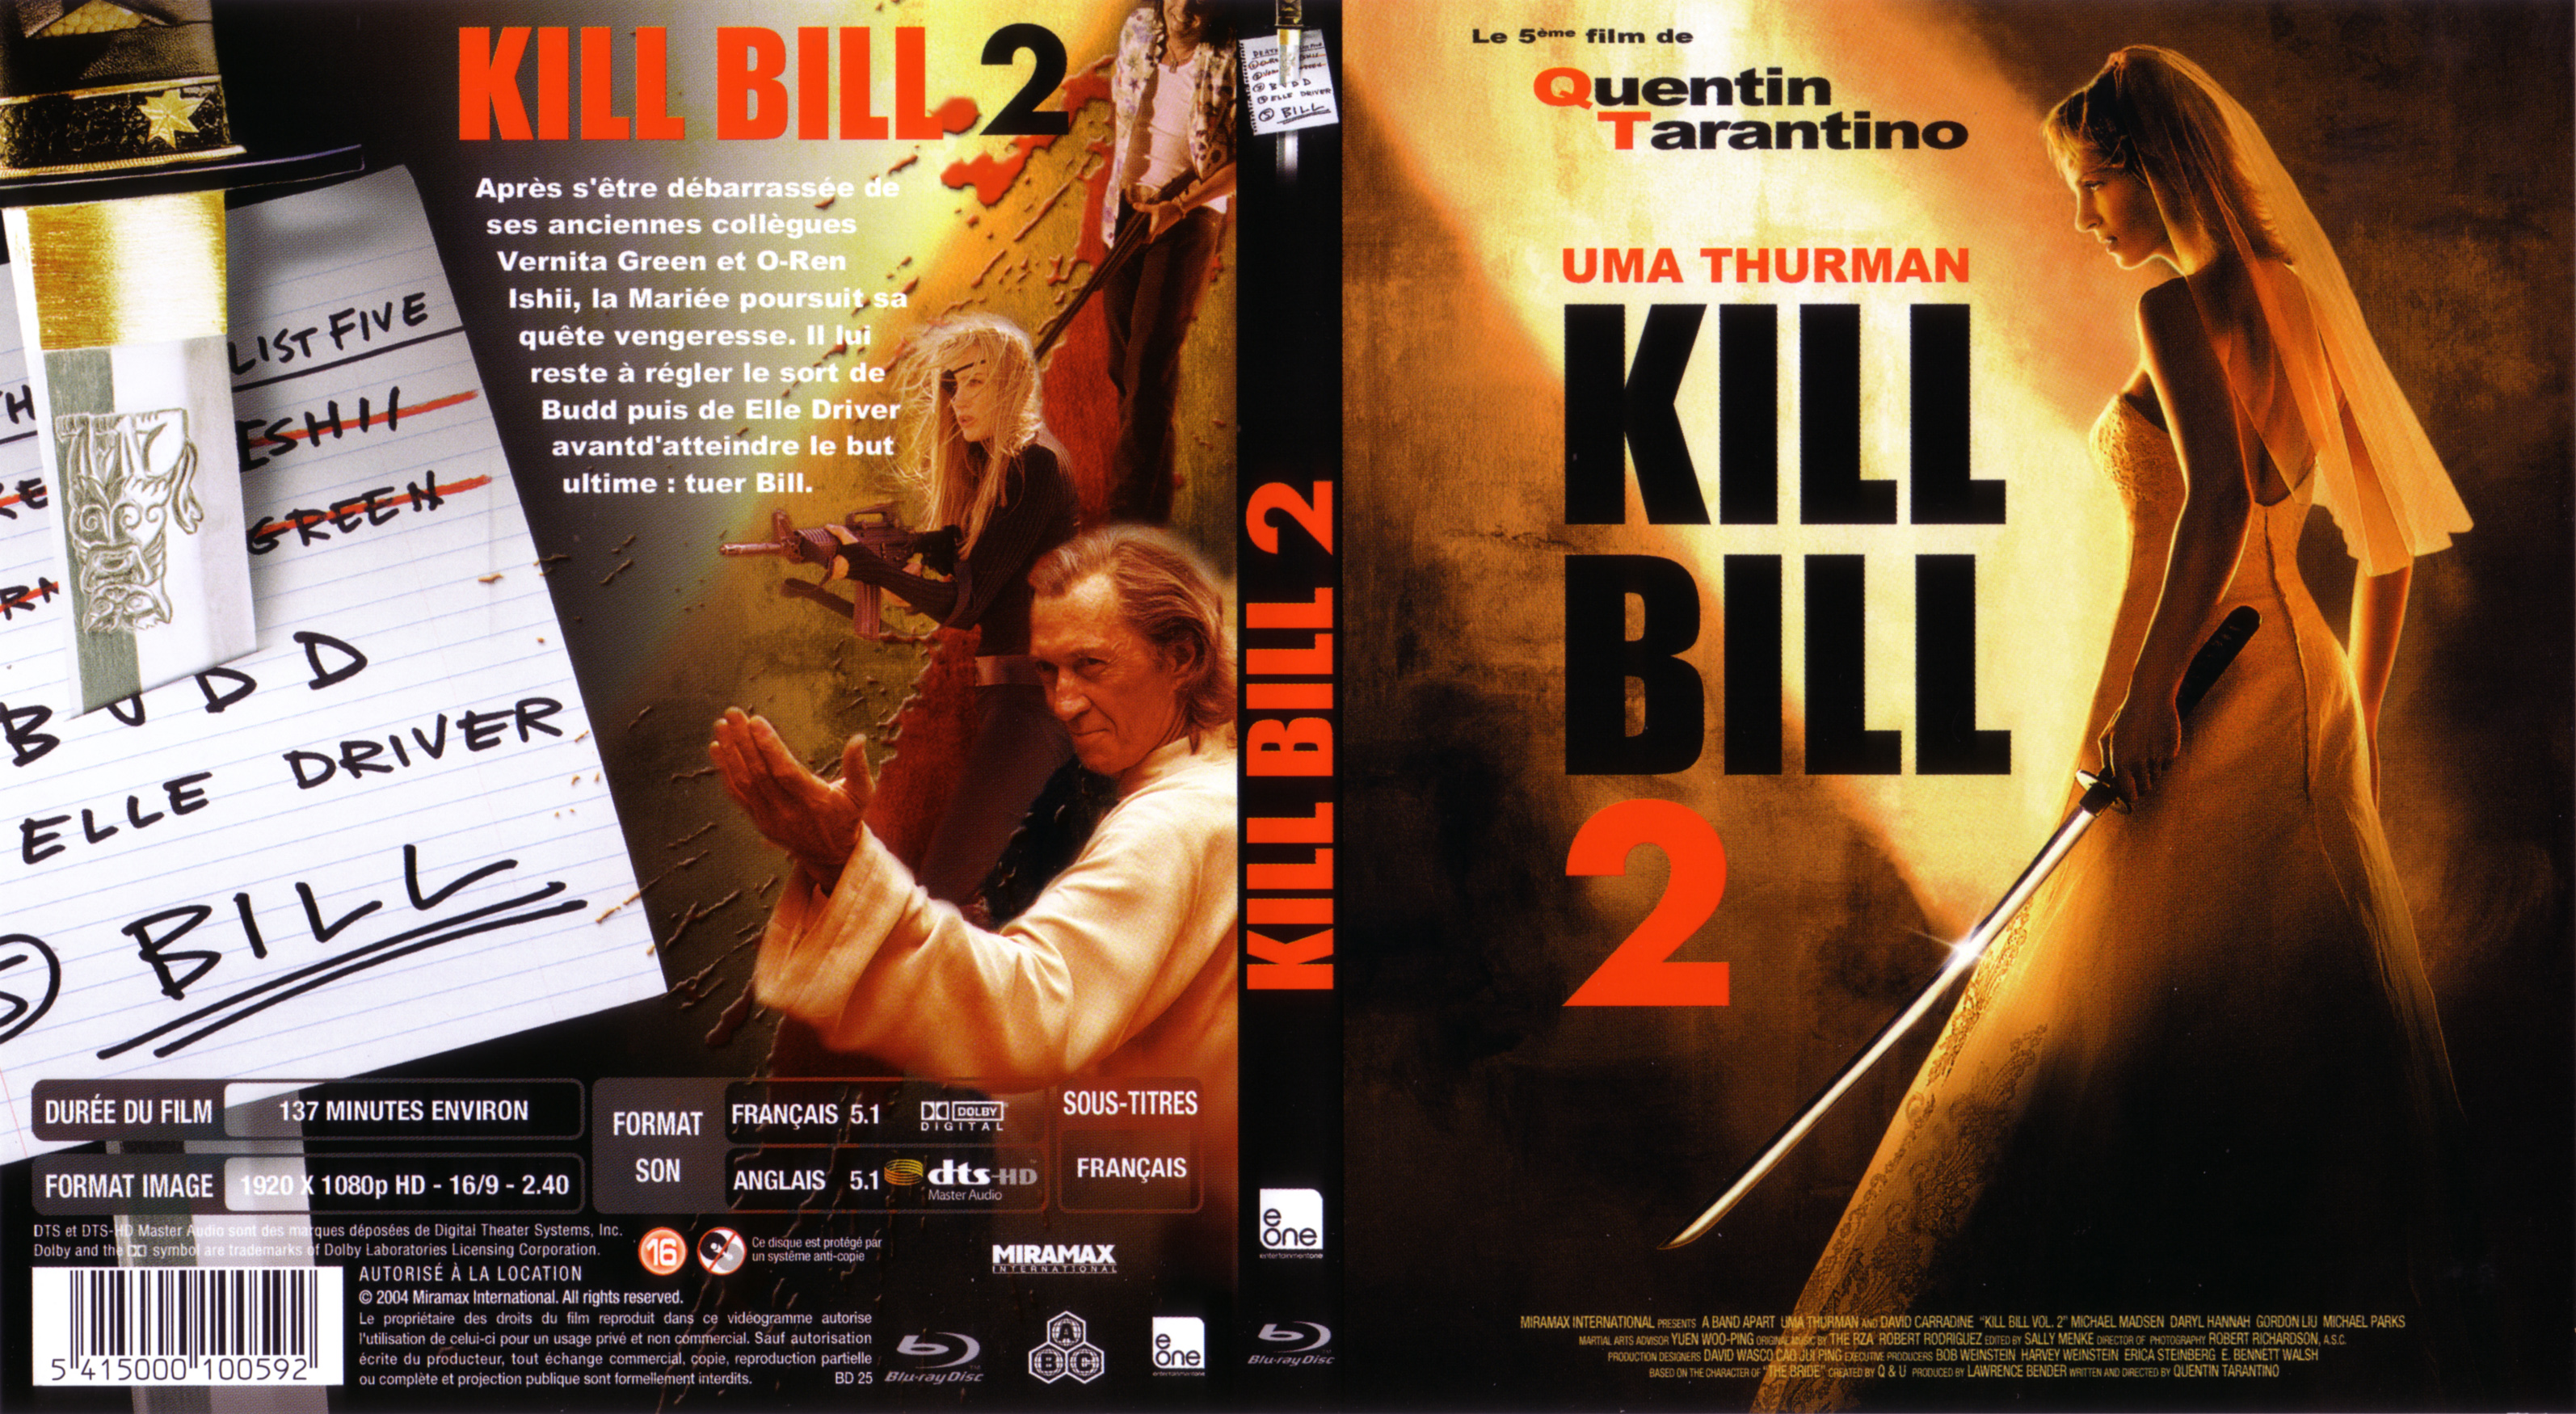 Jaquette DVD Kill Bill 2 (BLU-RAY) v2